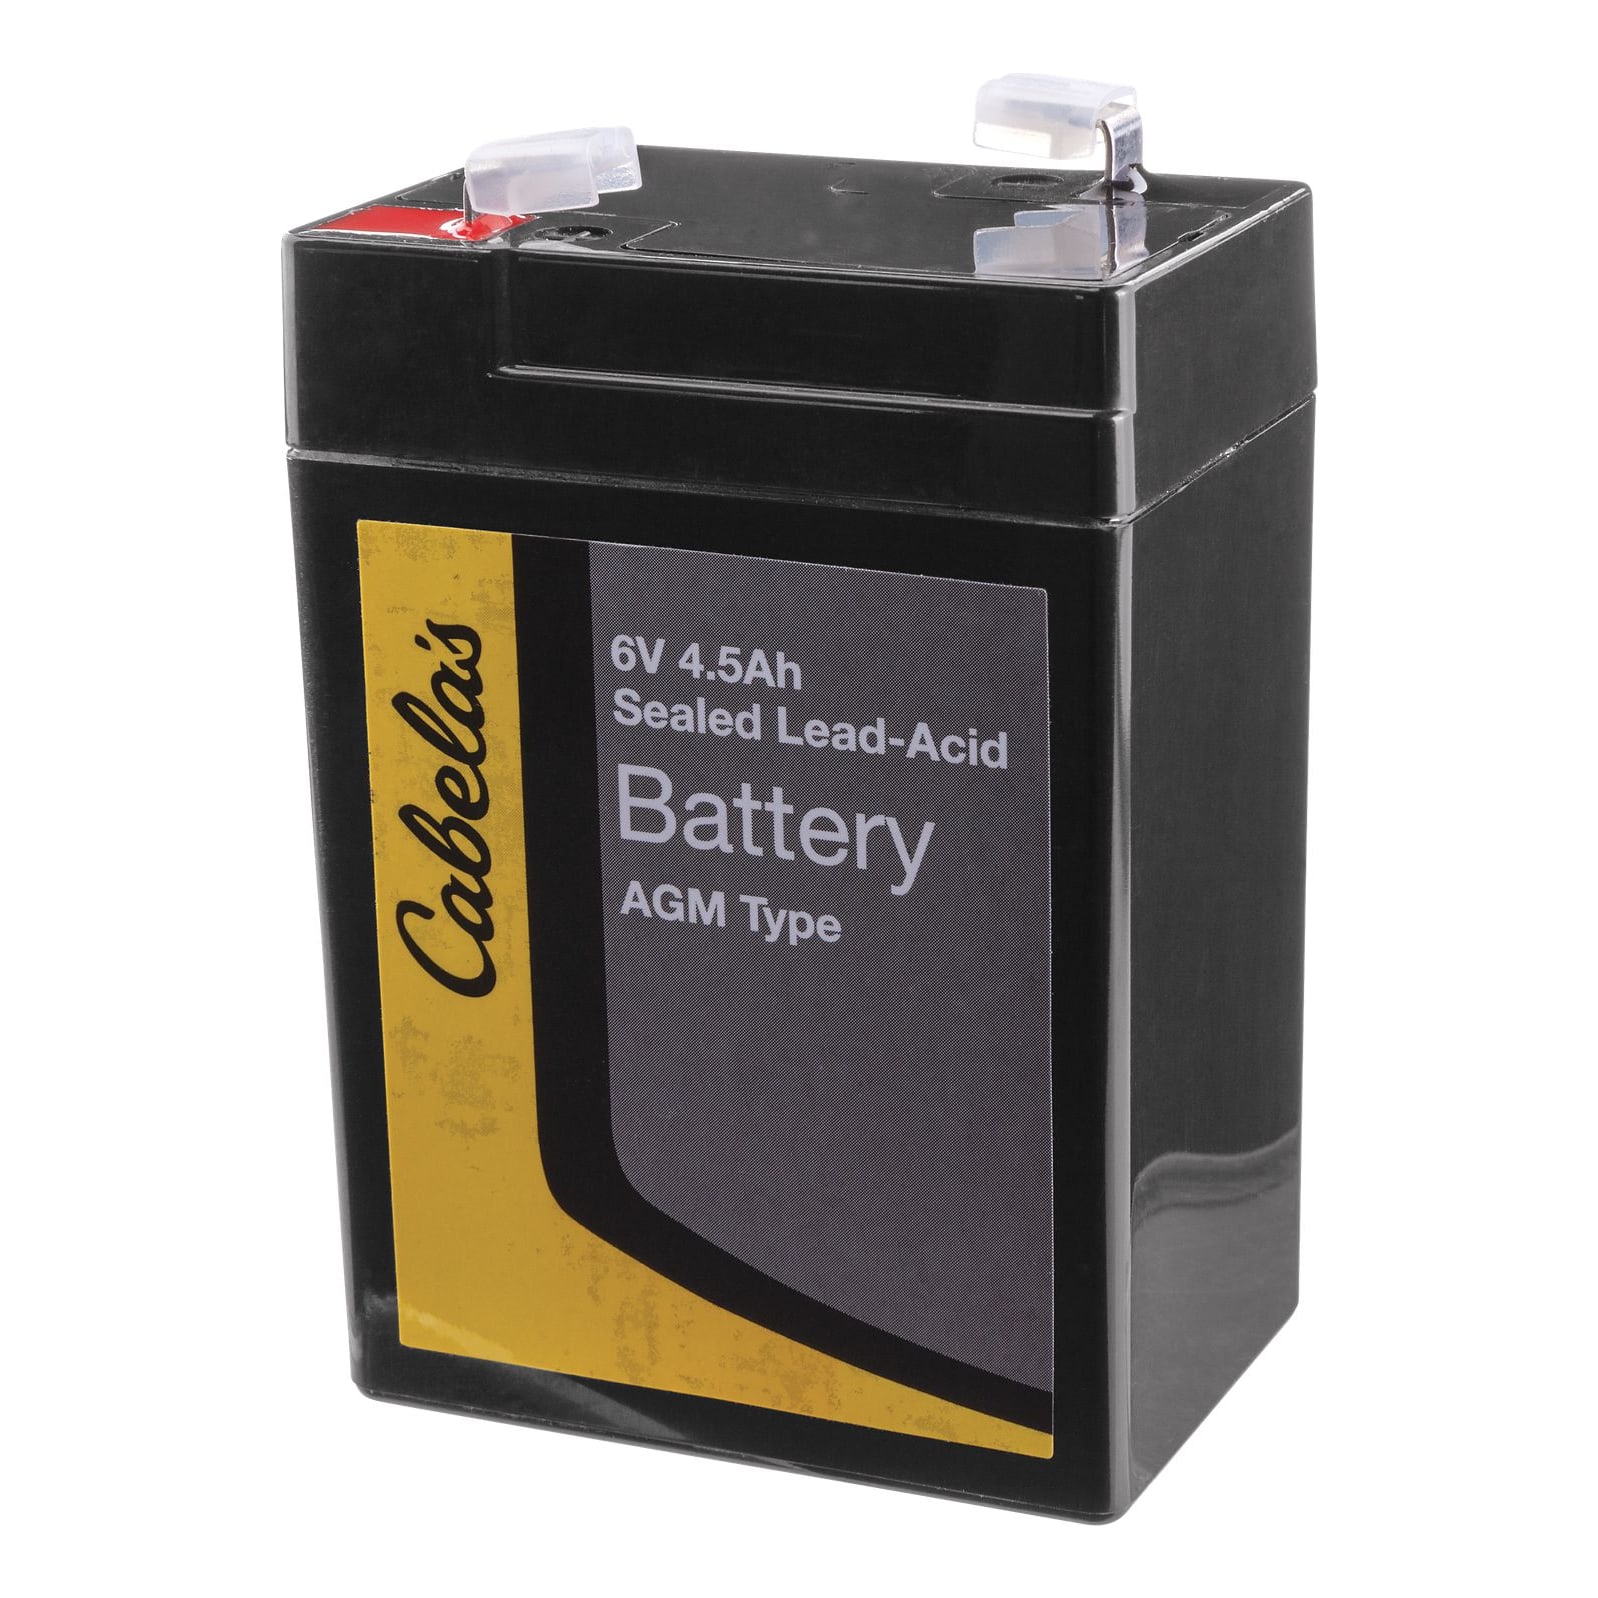 Cabela's® AGM Sealed Lead-Acid Battery